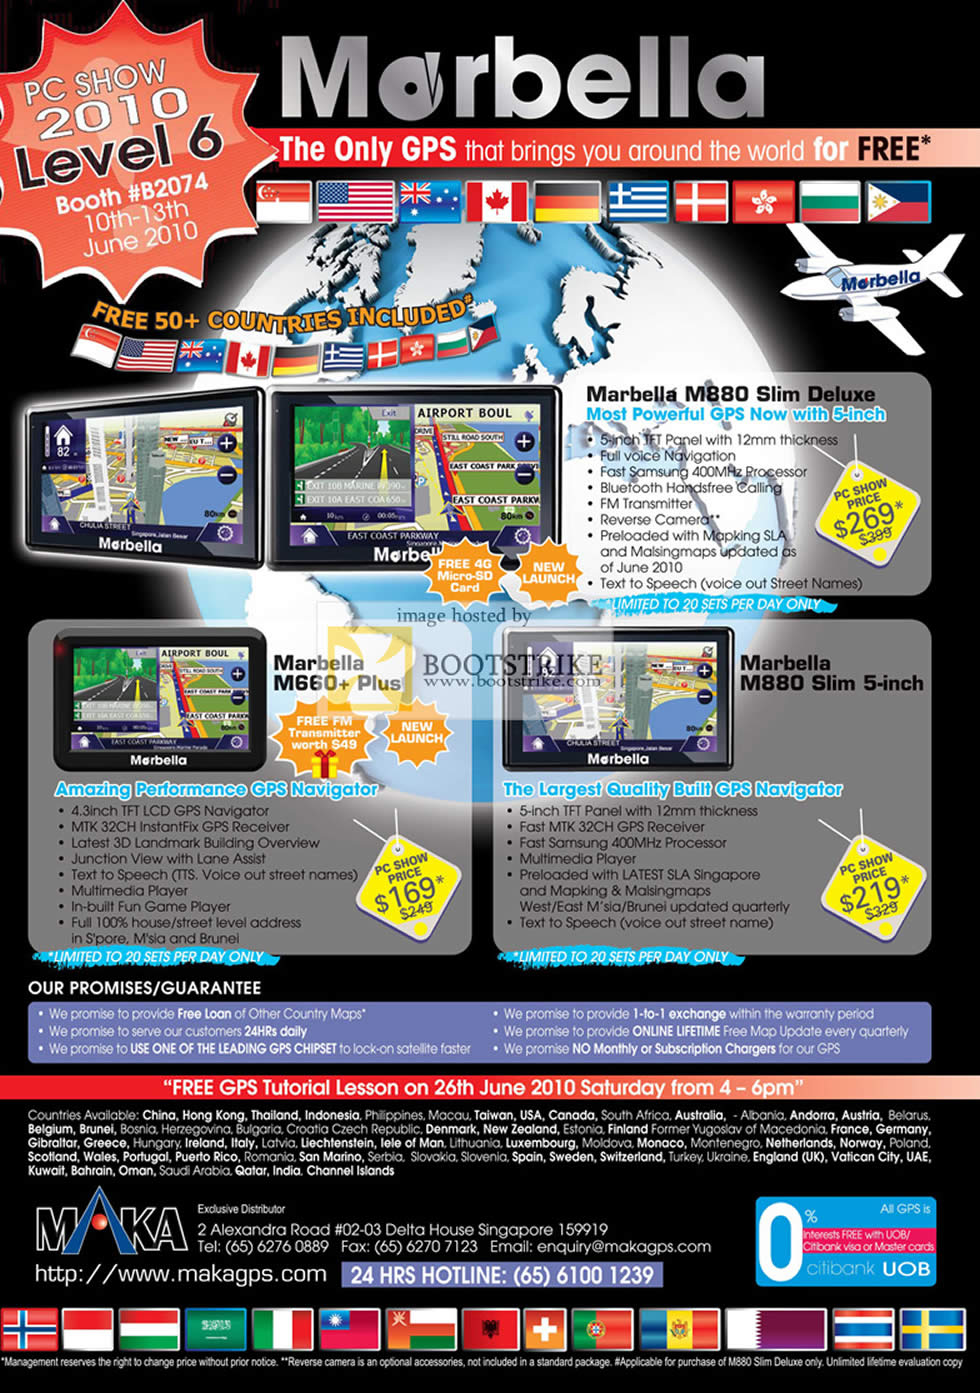 PC Show 2010 price list image brochure of Maka Marbella GPS M880 Slim Deluxe M660 Plus M880 GPS Navigation